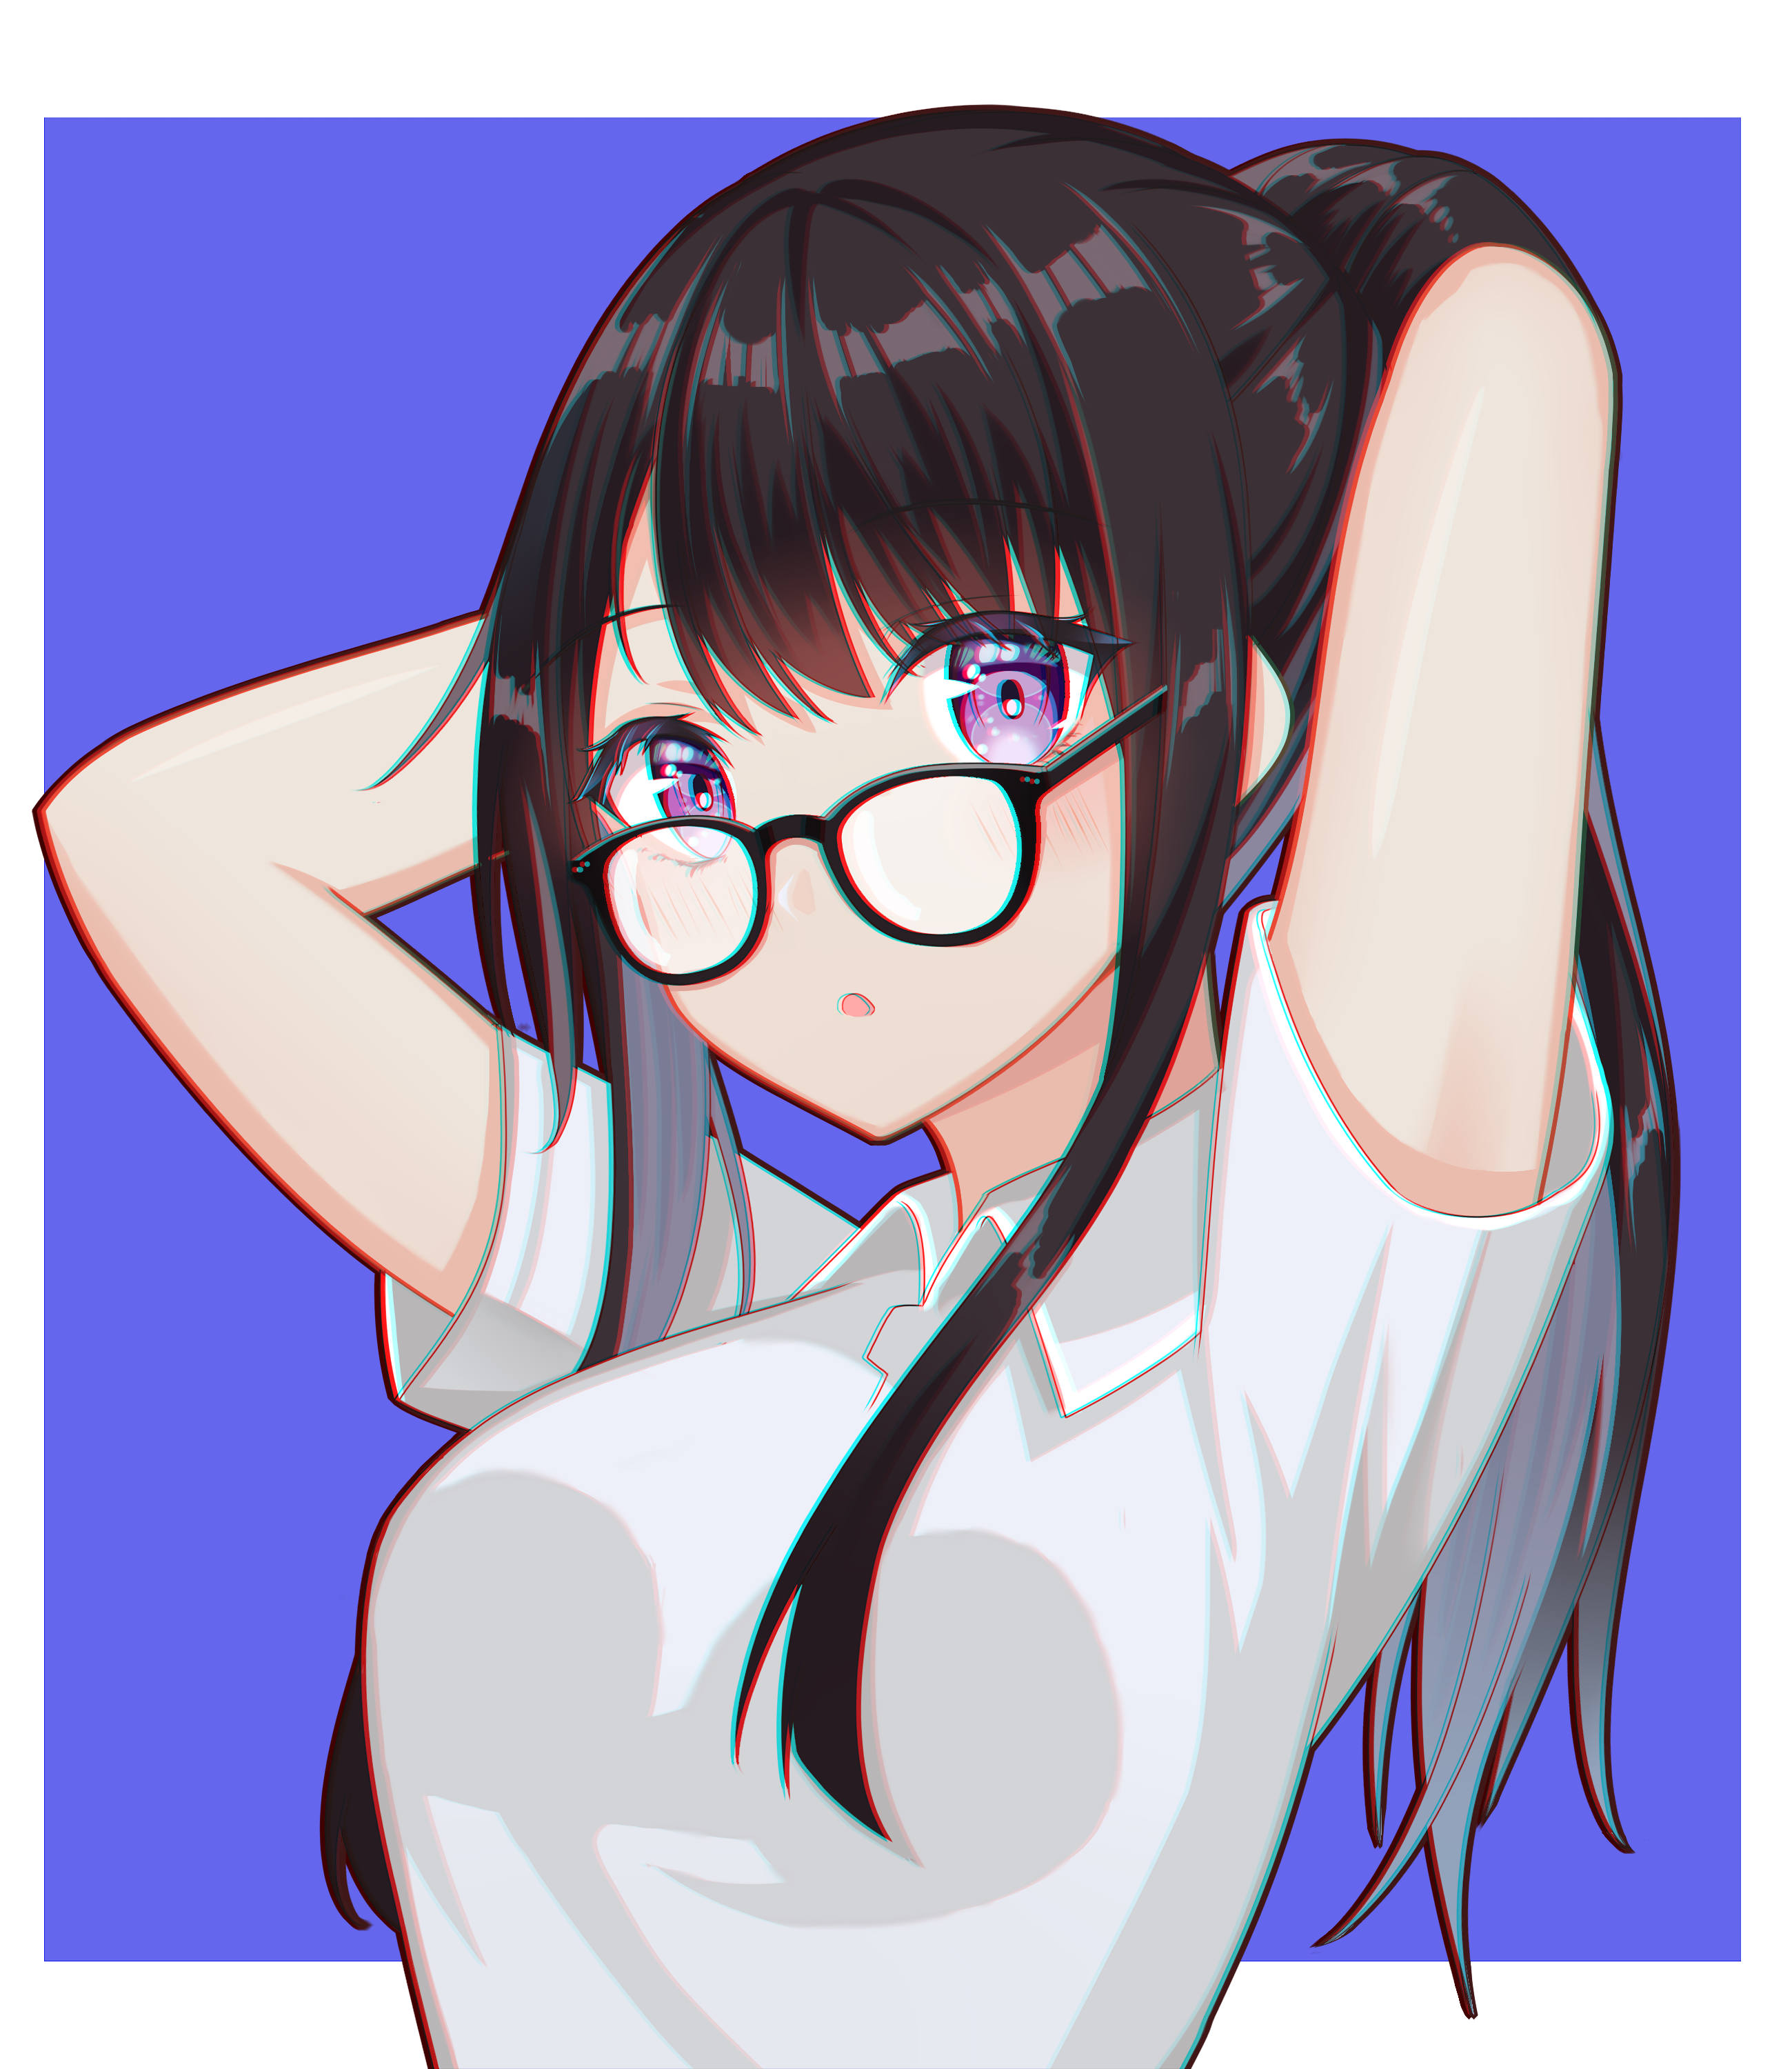 Anime 2599x3000 anime anime girls digital art artwork 2D portrait display CrysWorks dark hair ponytail purple eyes glasses